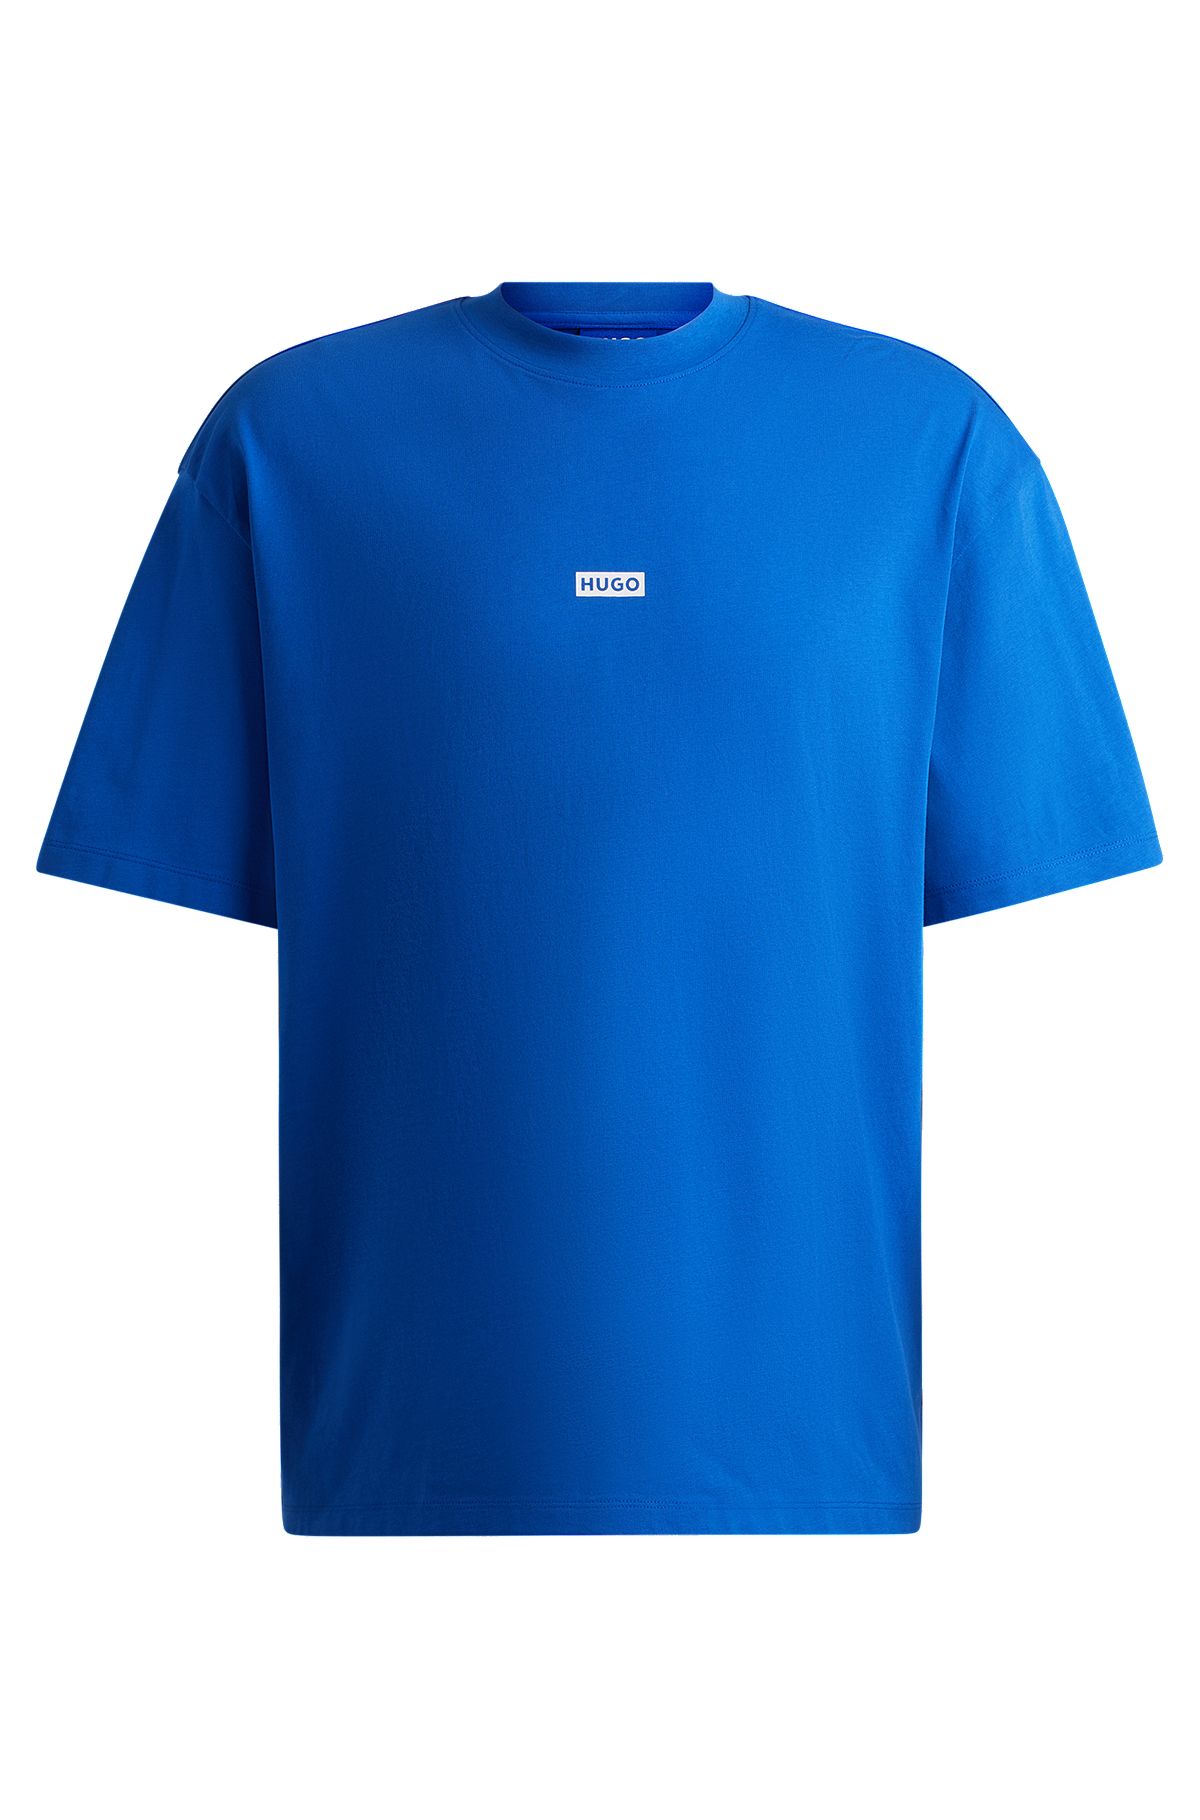 Cotton-jersey T-shirt with new-season logo story, Blue